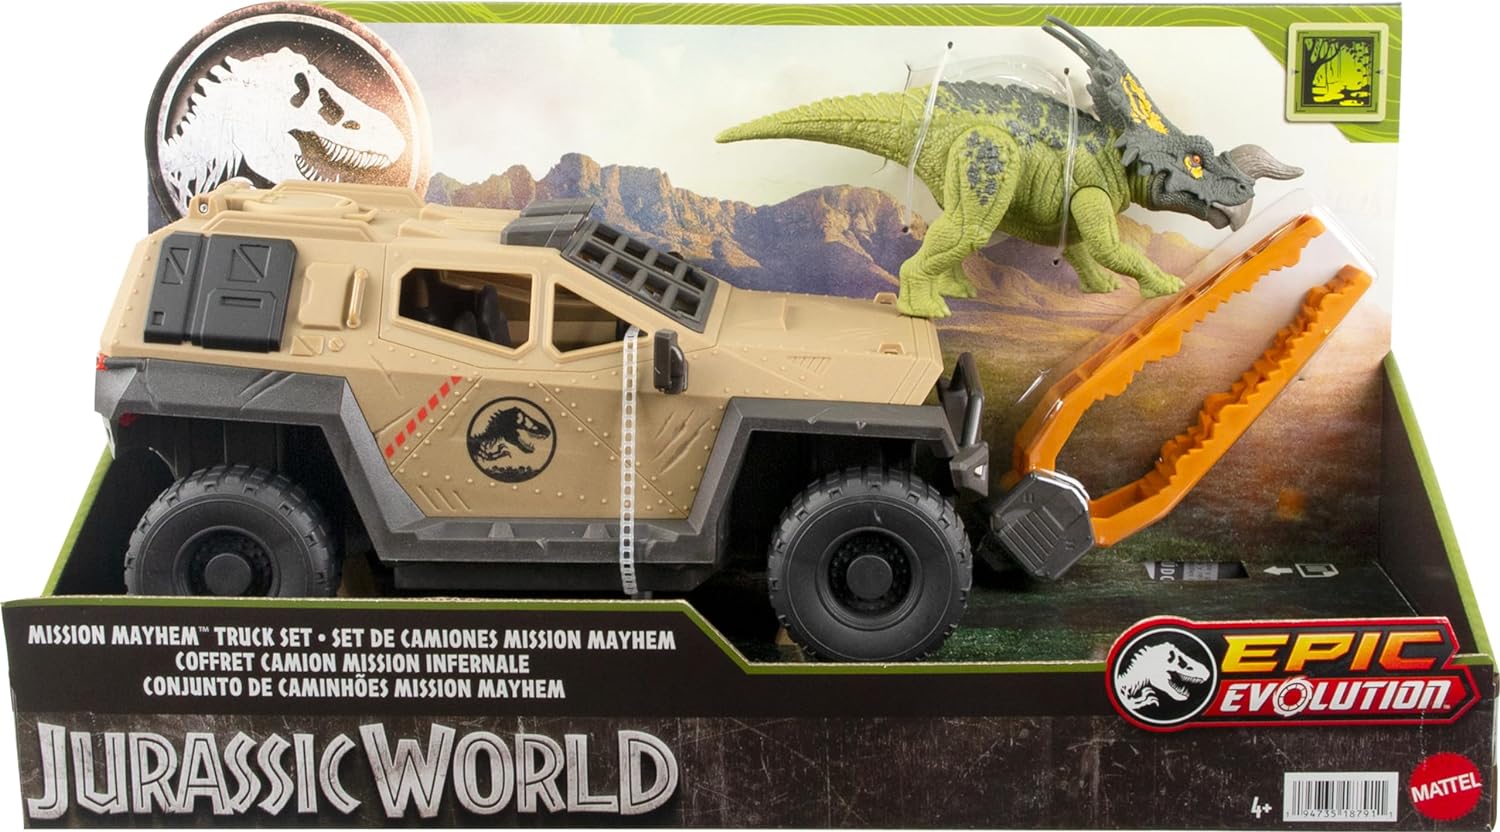 Jurassic World Mission Mayhem Truck